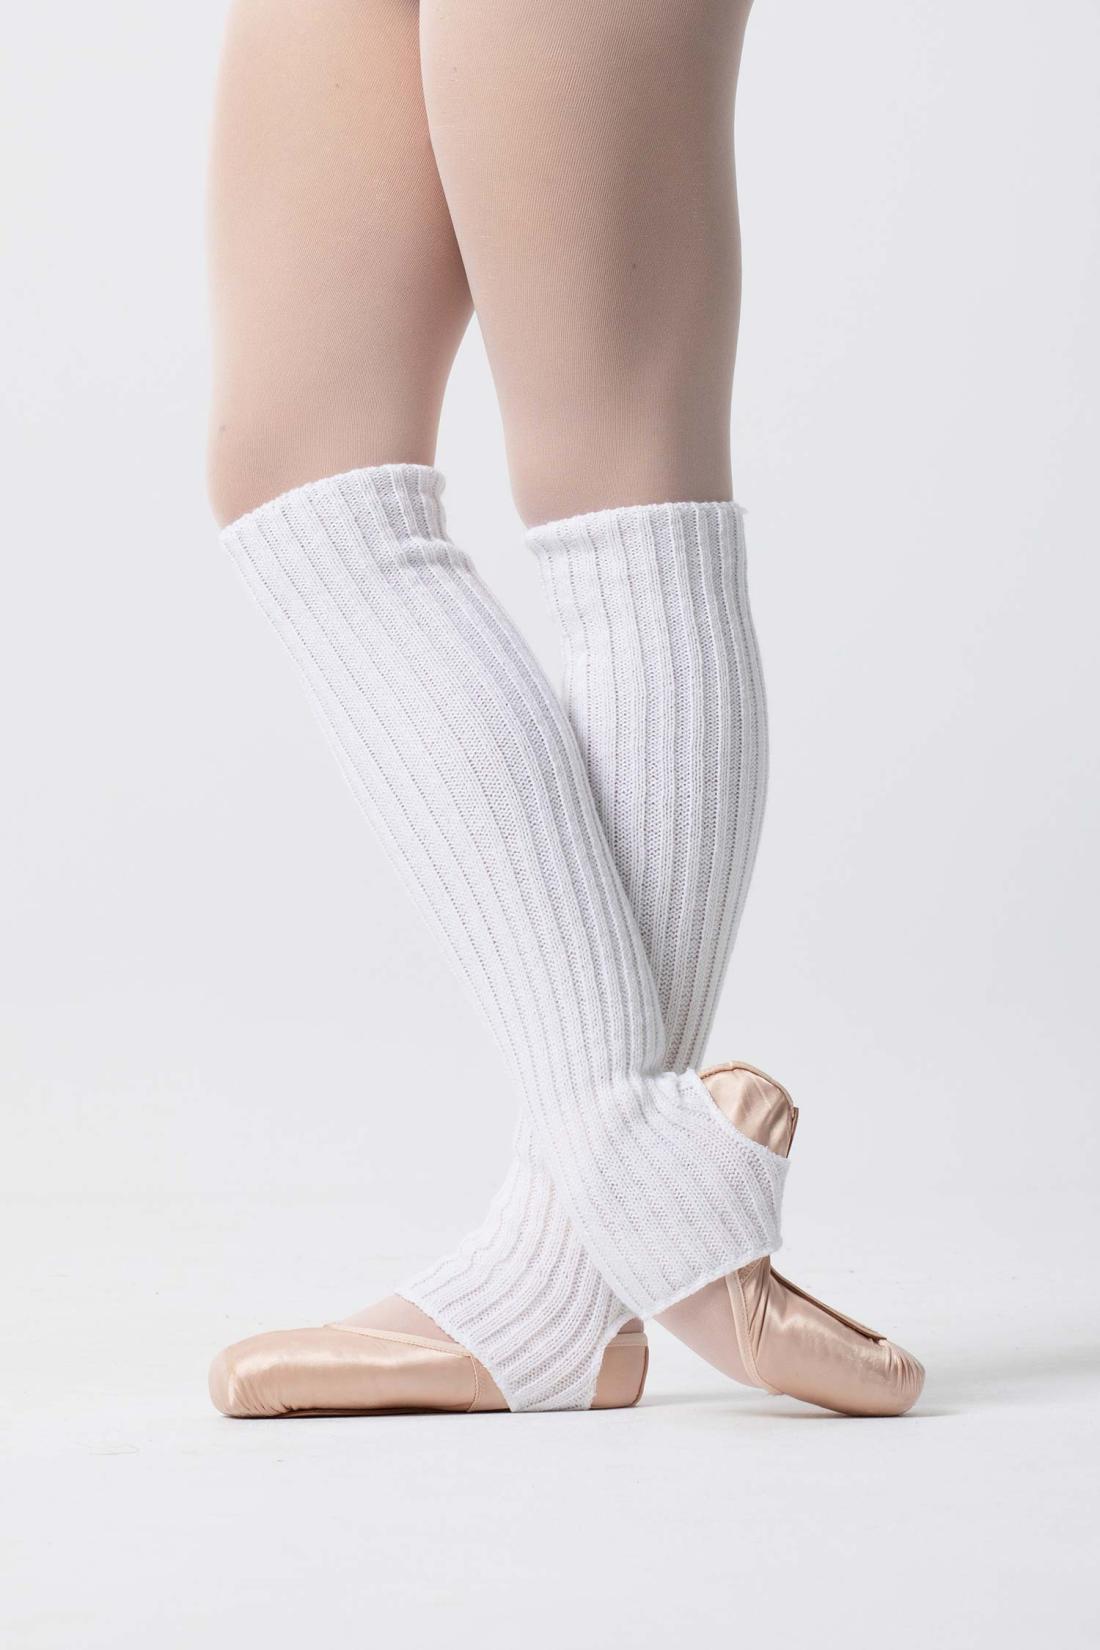 Classic Medcan knit stirrup Legwarmers Intermezzo ballet dancewear